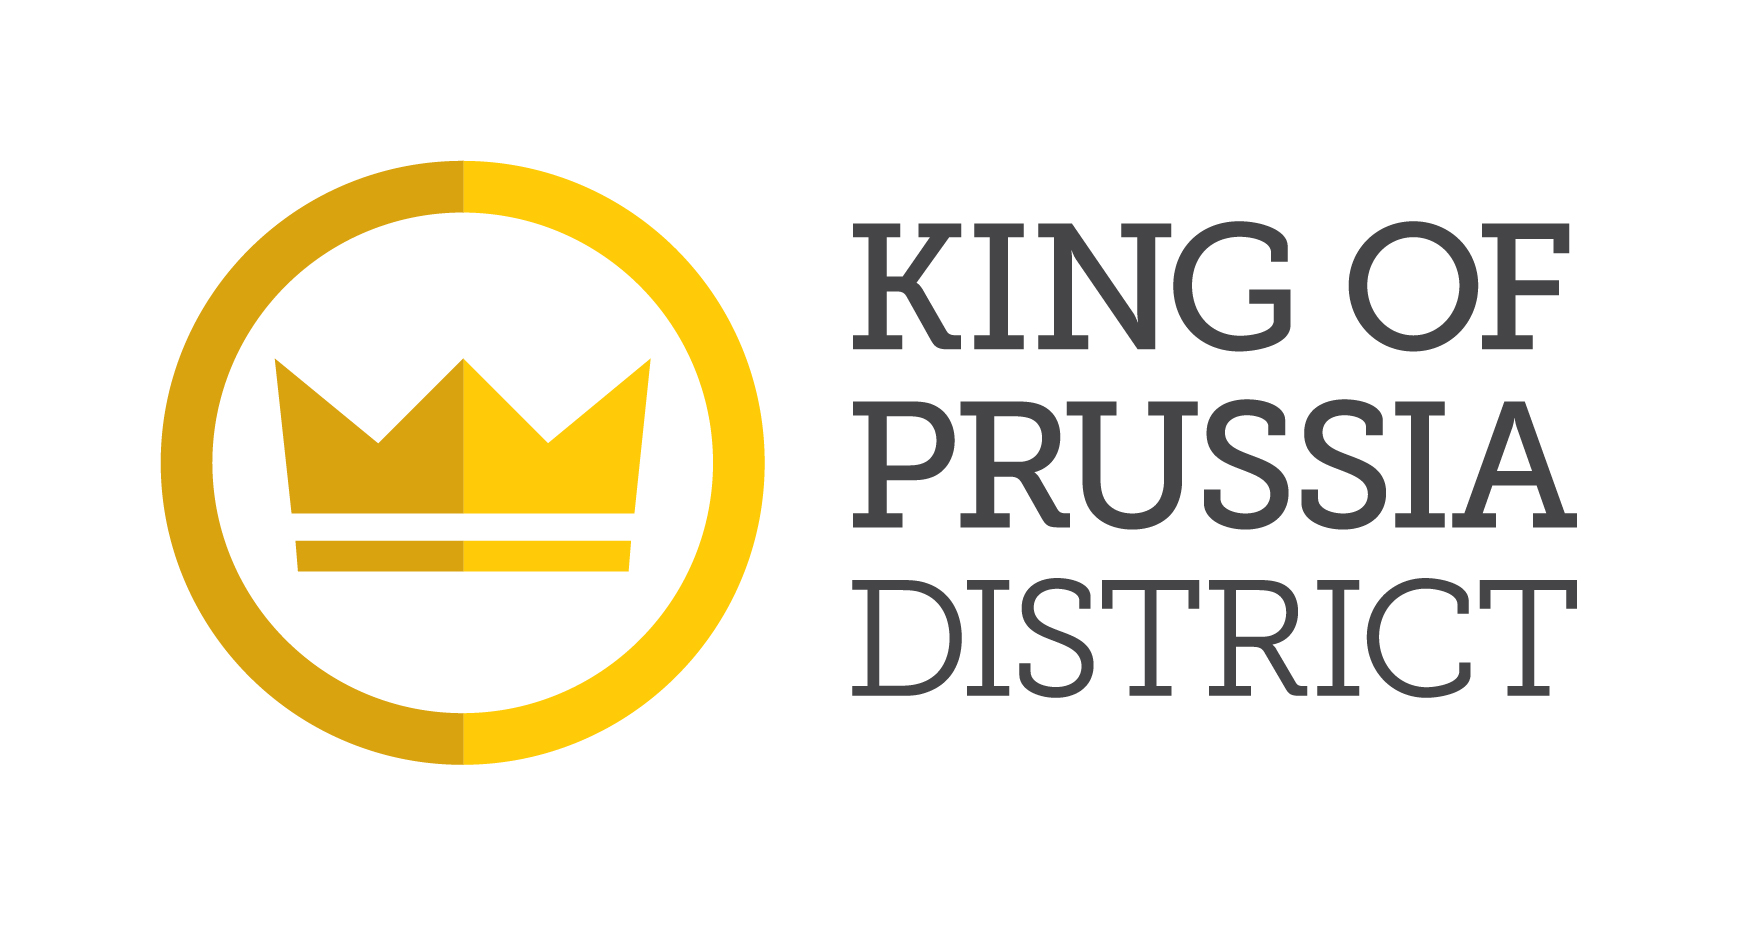 King of Prussia District (kopbid) - Profile